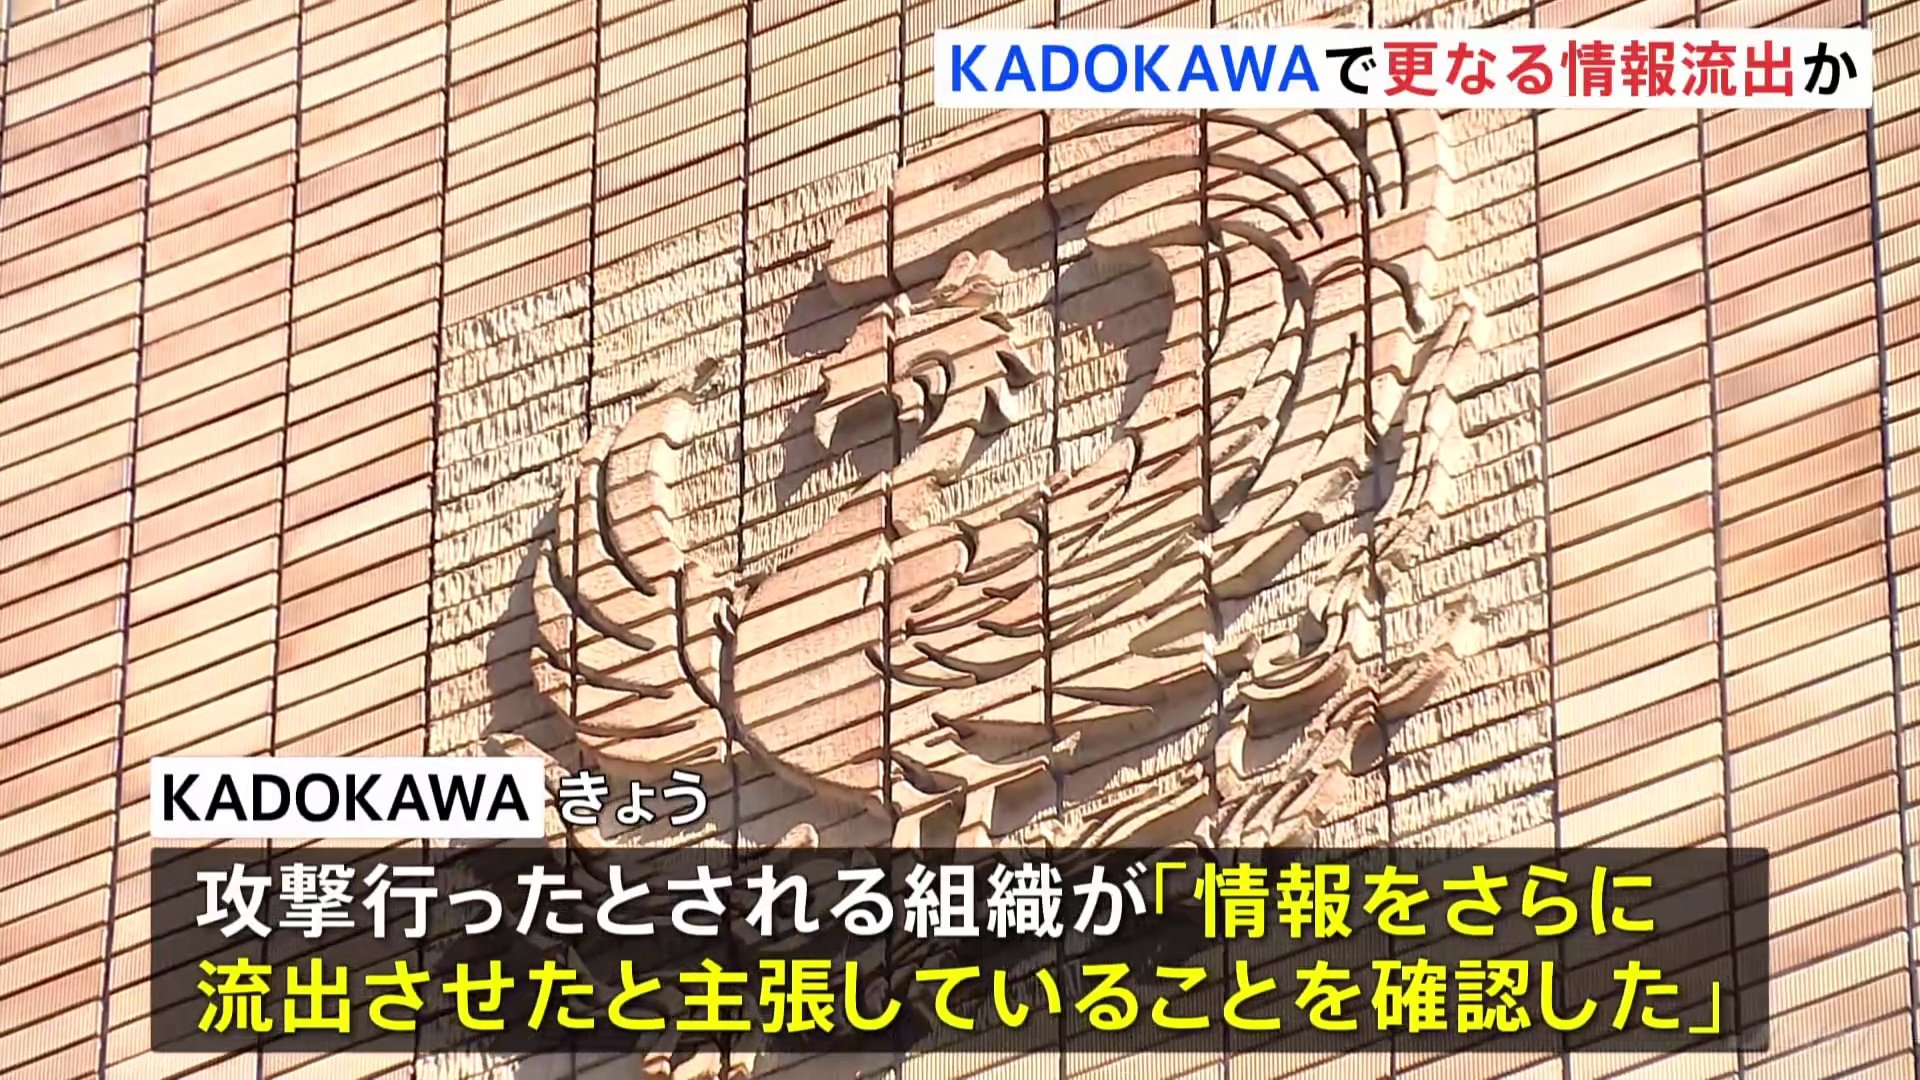 KADOKAWA さらに情報流出か「信ぴょう性を調査中」 ランサムウェアによるサイバー攻撃受ける